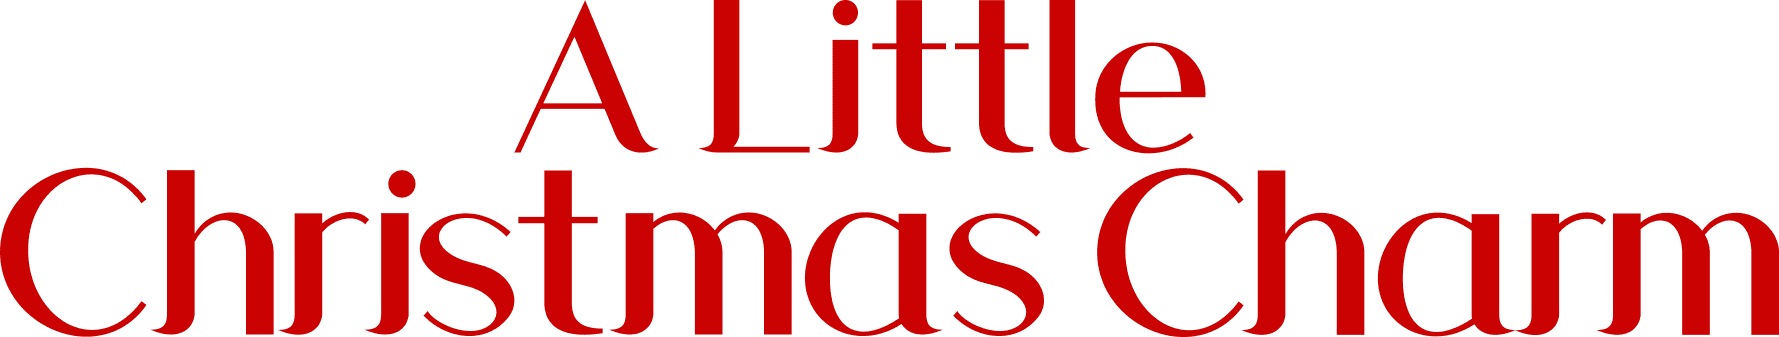 A Little Christmas Charm logo